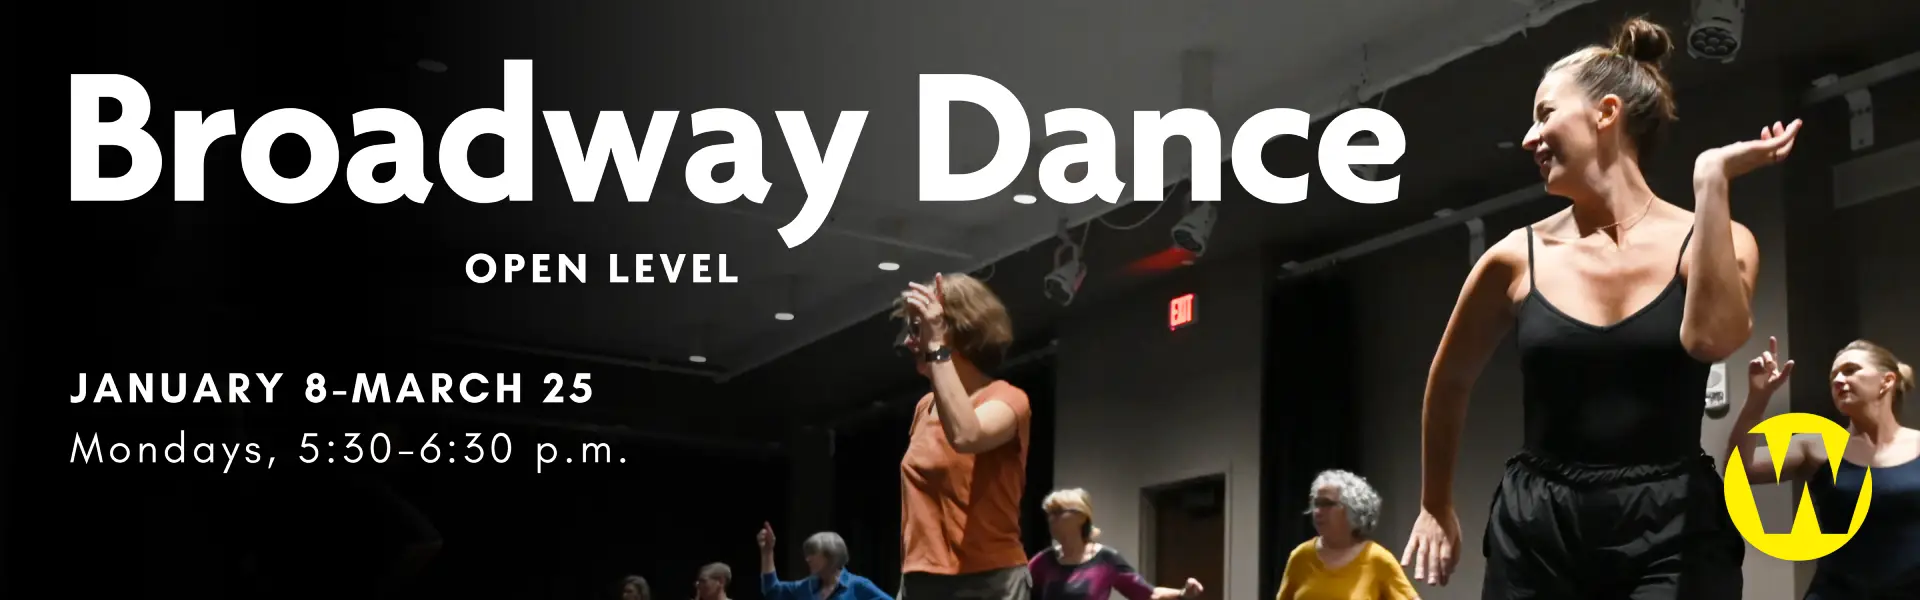 Broadway Dance - Open Level